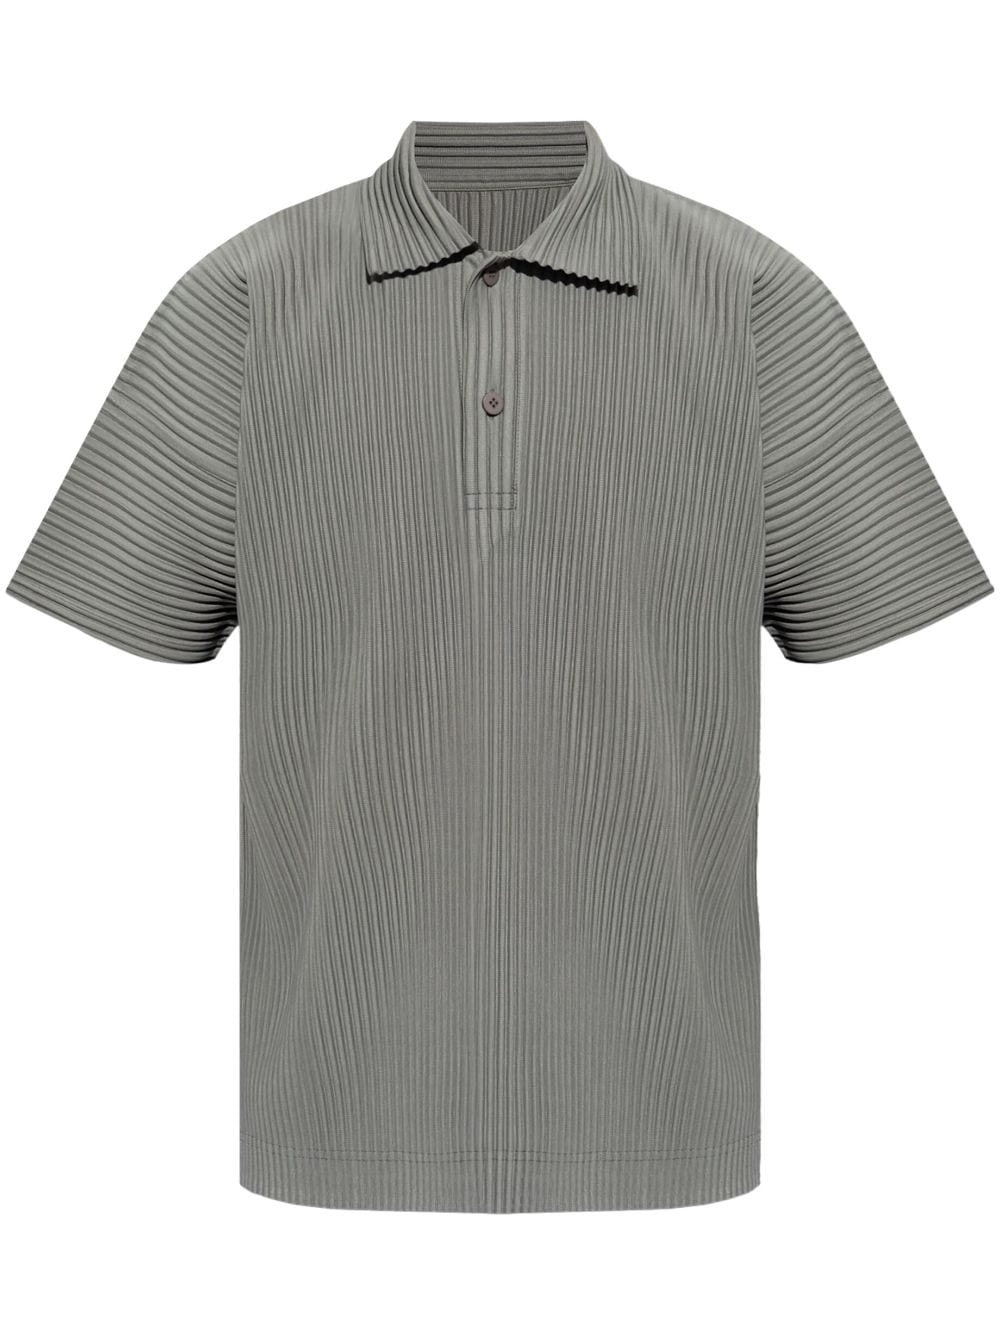 Homme Plissé Issey Miyake short-sleeve plissé polo shirt - Grey von Homme Plissé Issey Miyake